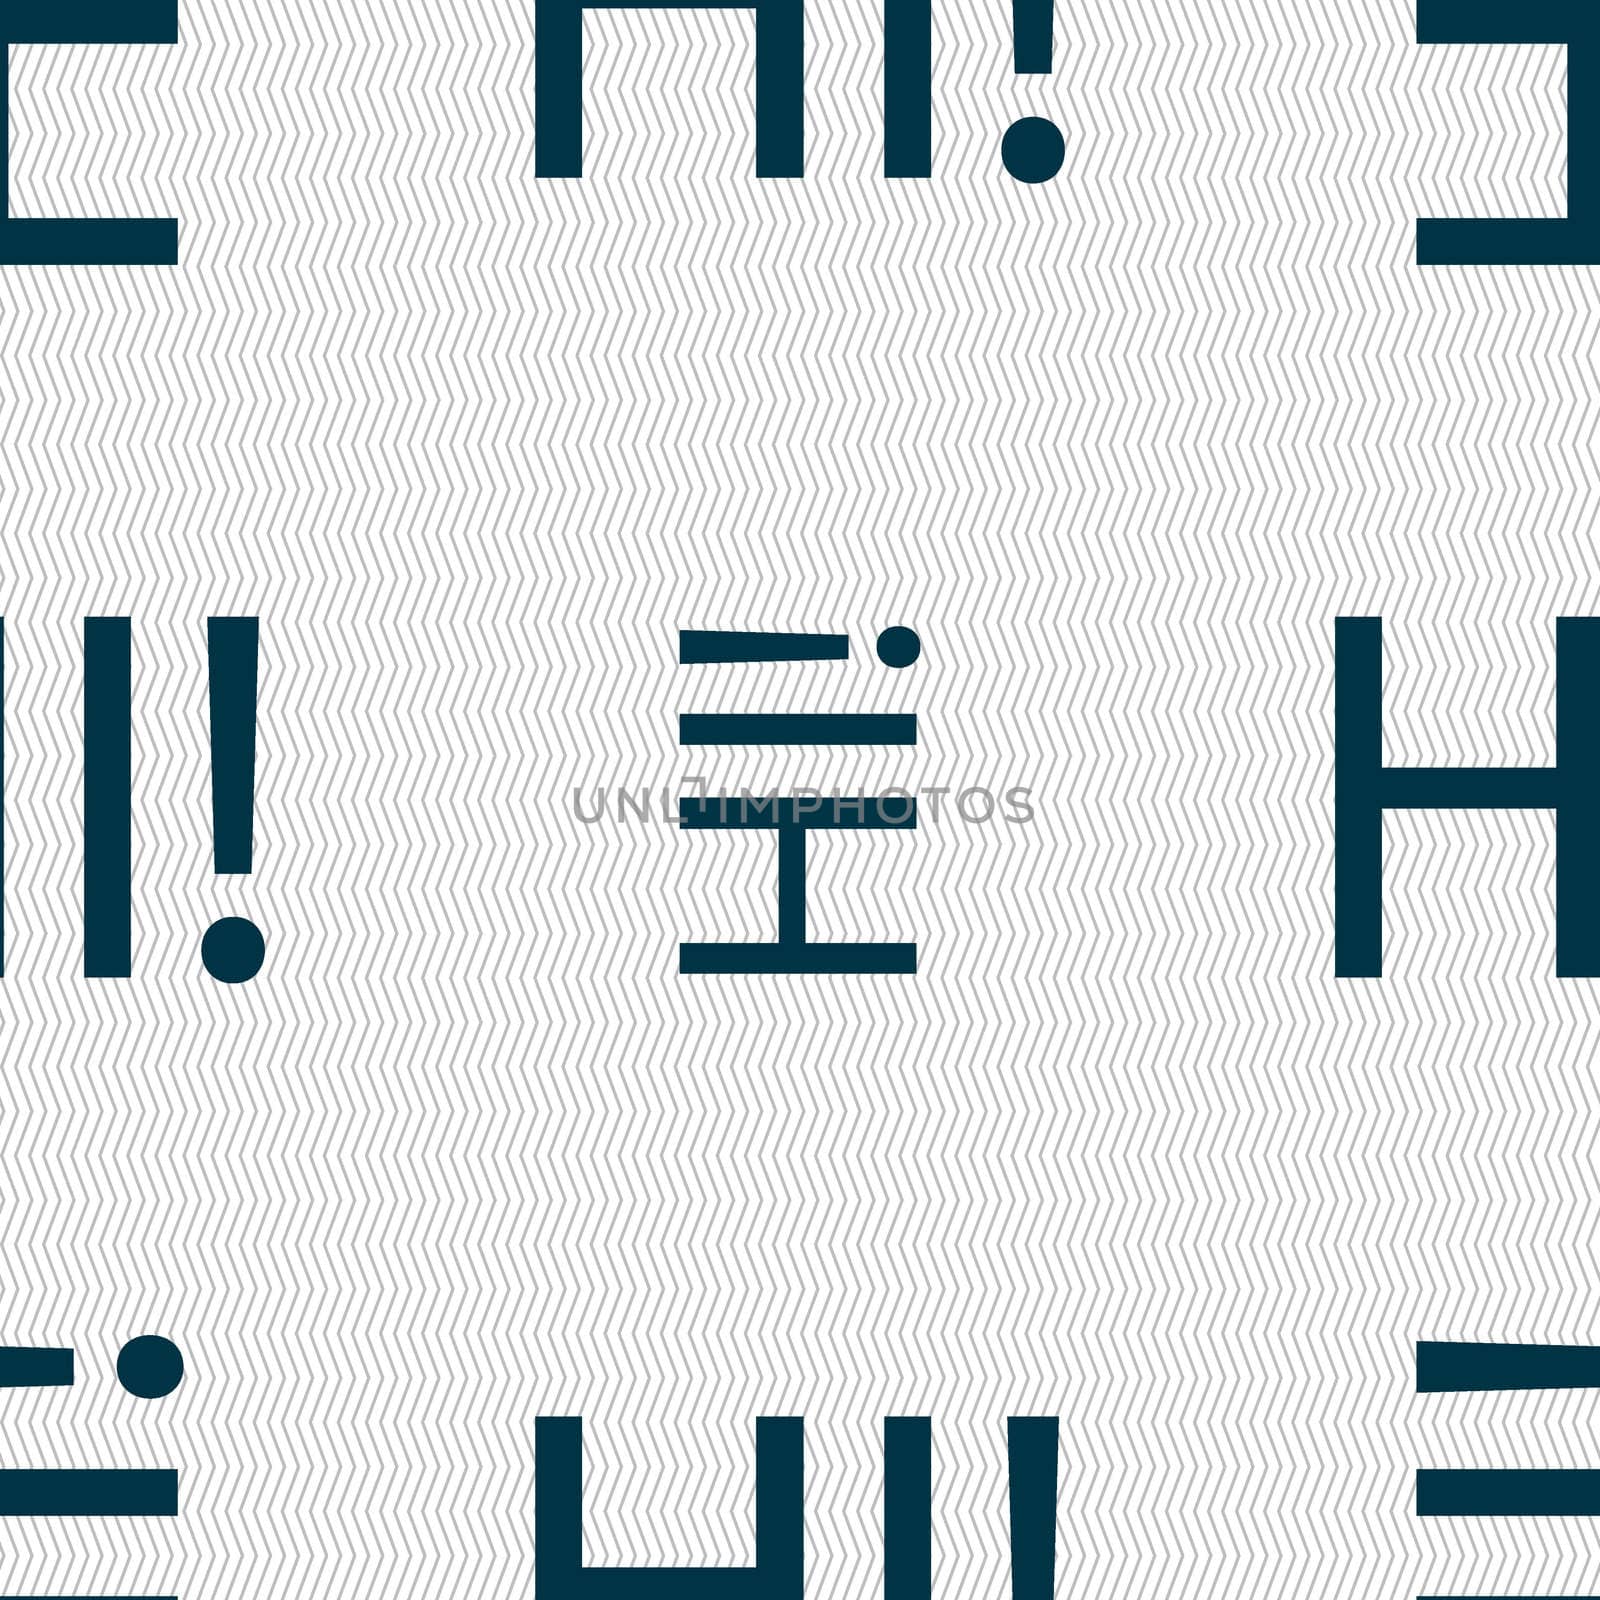 HI sign icon. India translation symbol. Seamless abstract background with geometric shapes. illustration